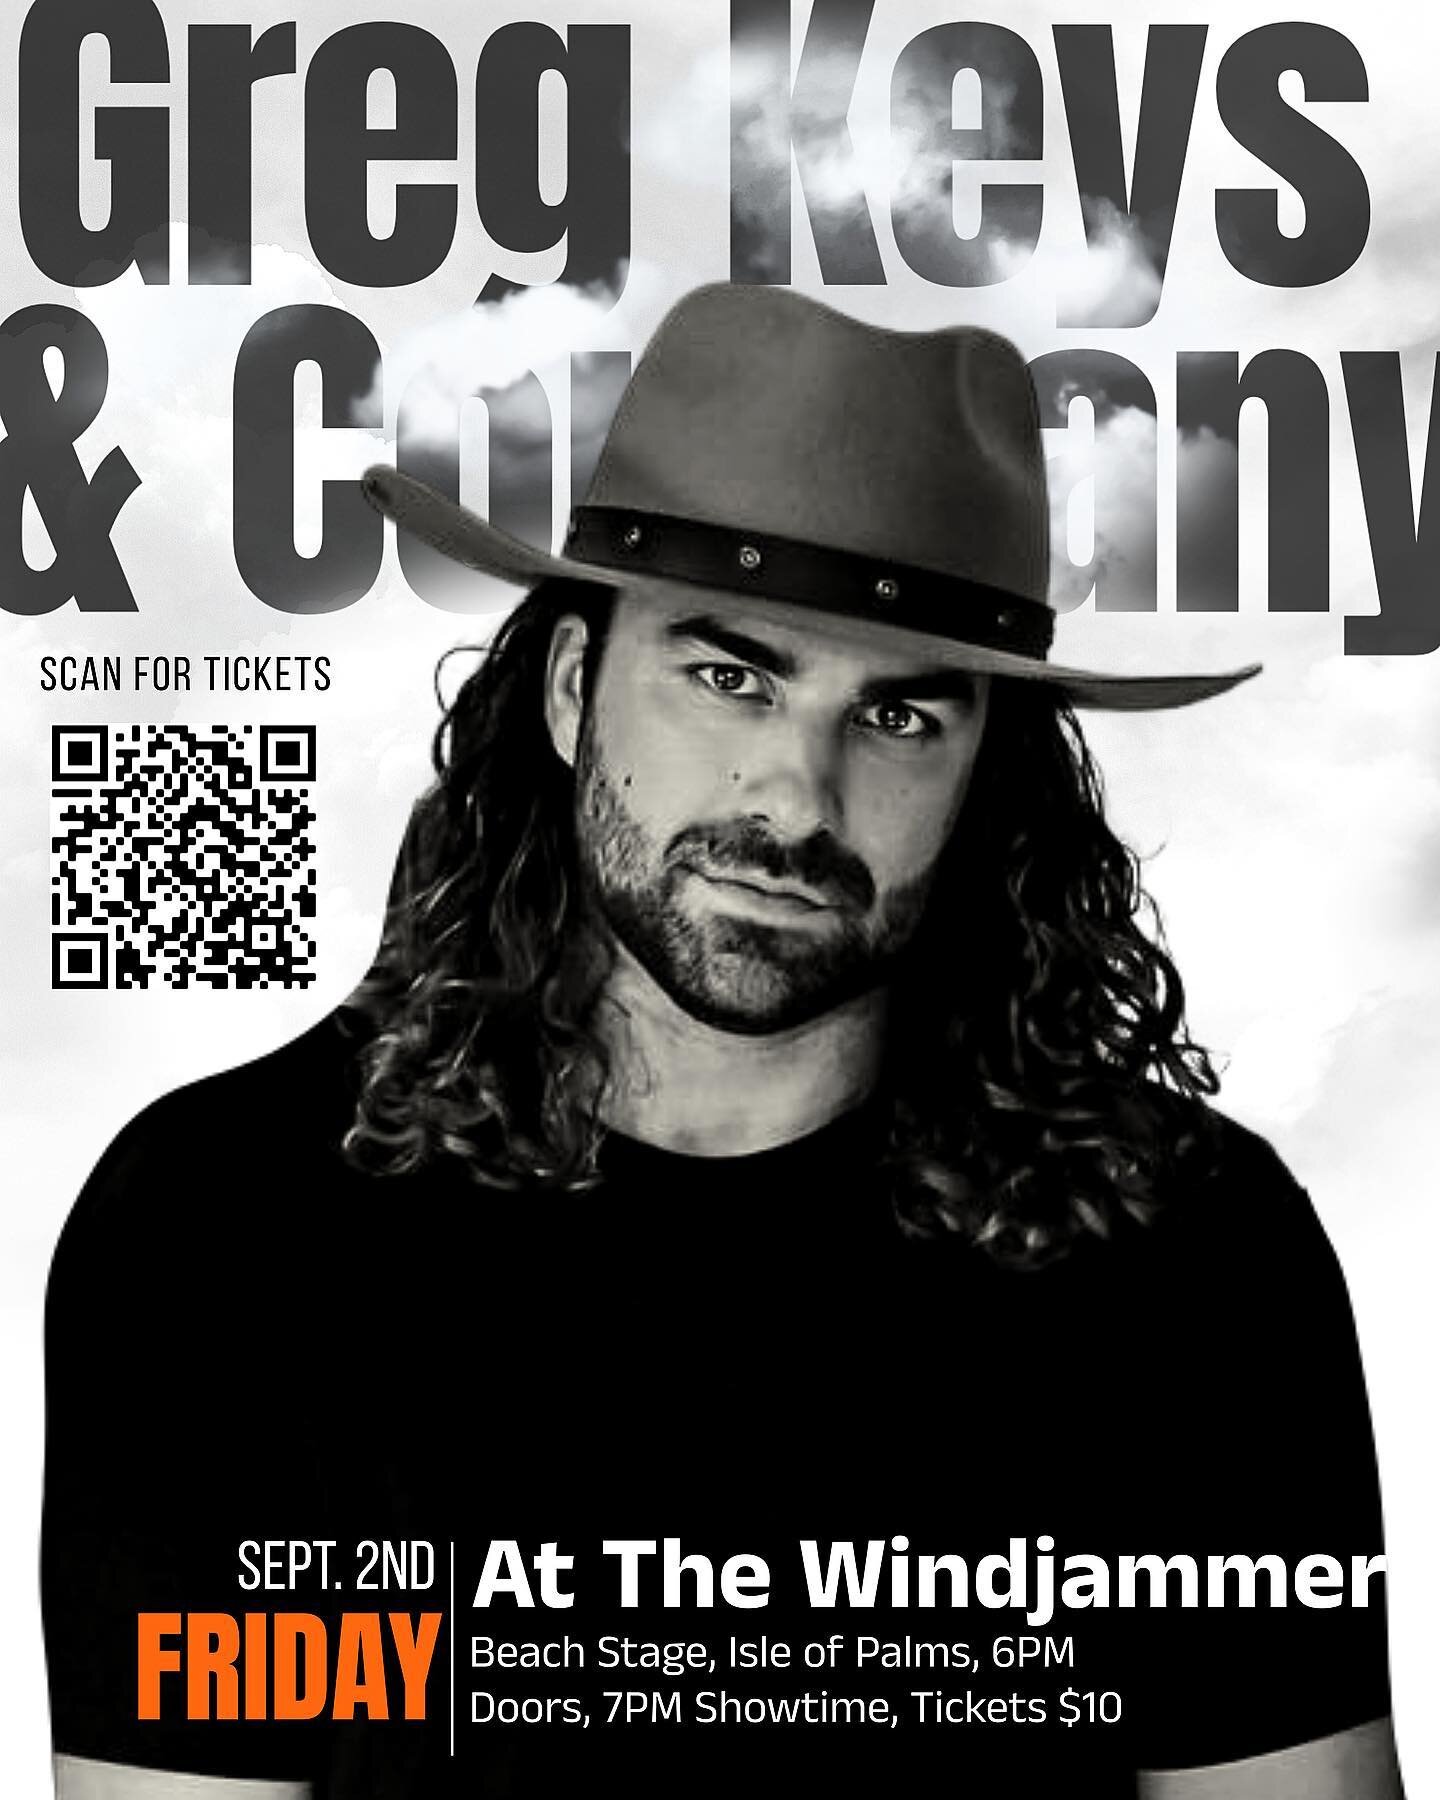 Greg Keys &amp; Co. l Labor Day Weekend l Windjammer Beach Stage l 6pm Doors

Ticket Link In Bio
❤️&amp;🎶